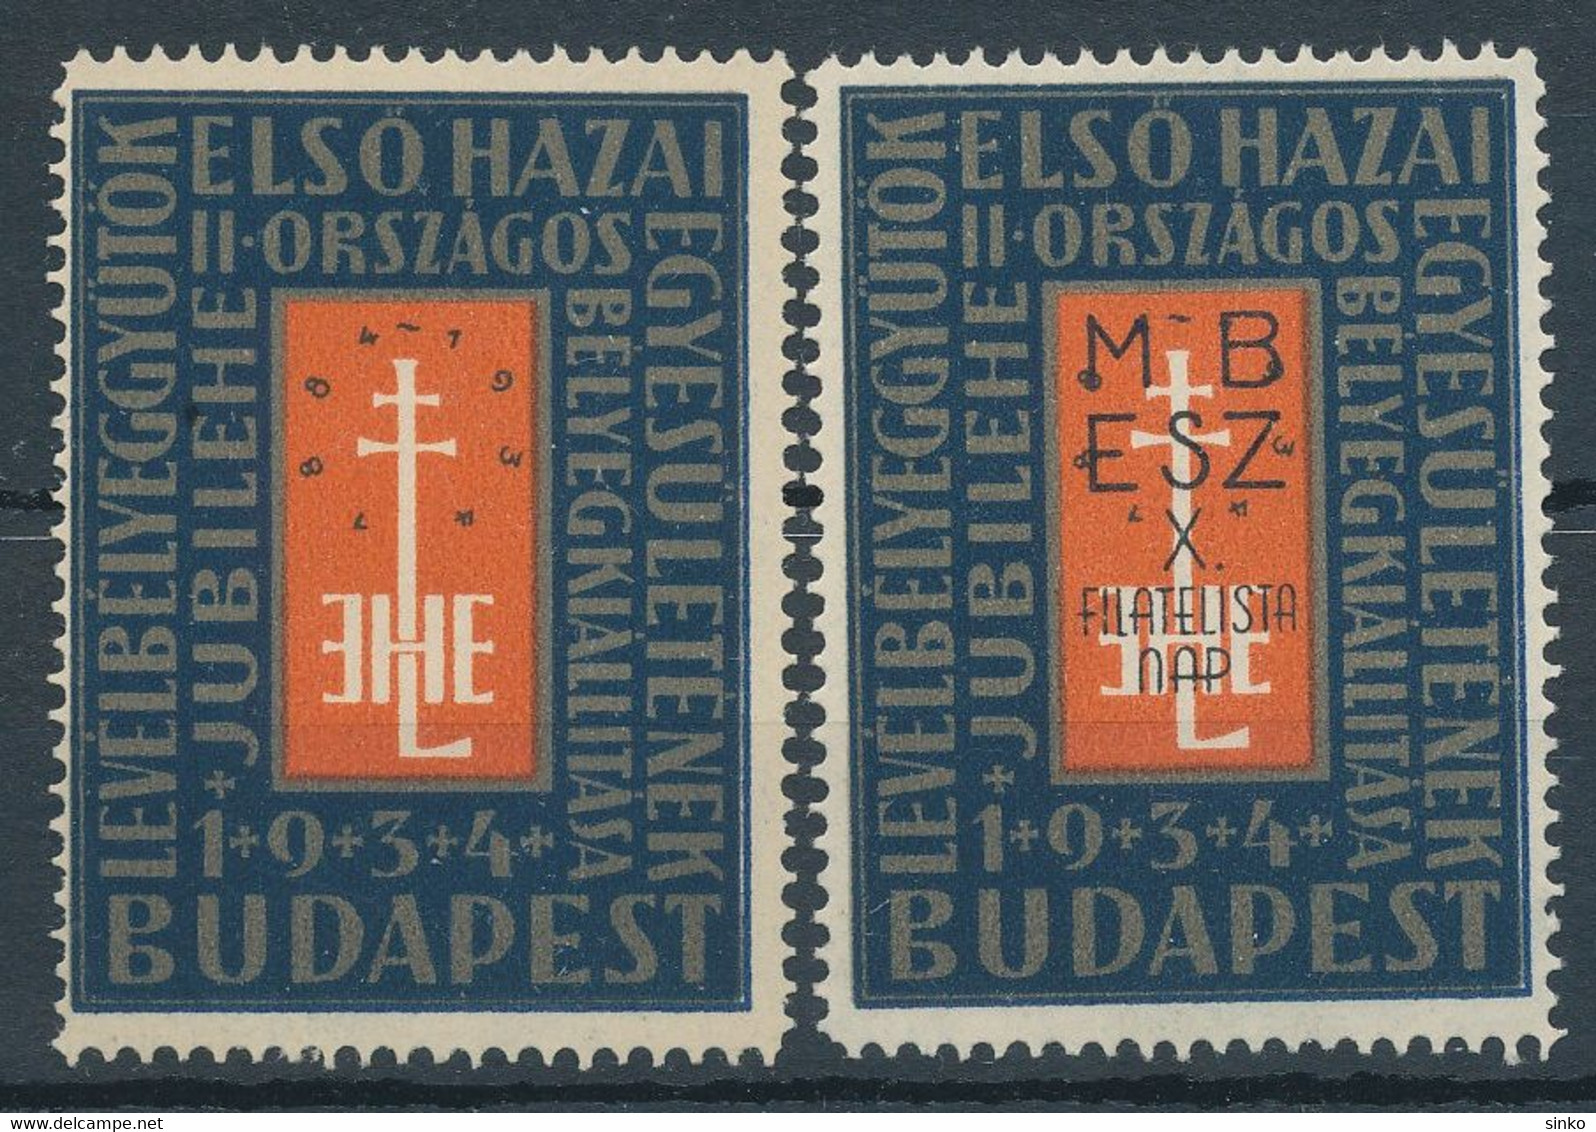 1934. Jubilehe Stamp Exhibition Budapest - Foglietto Ricordo